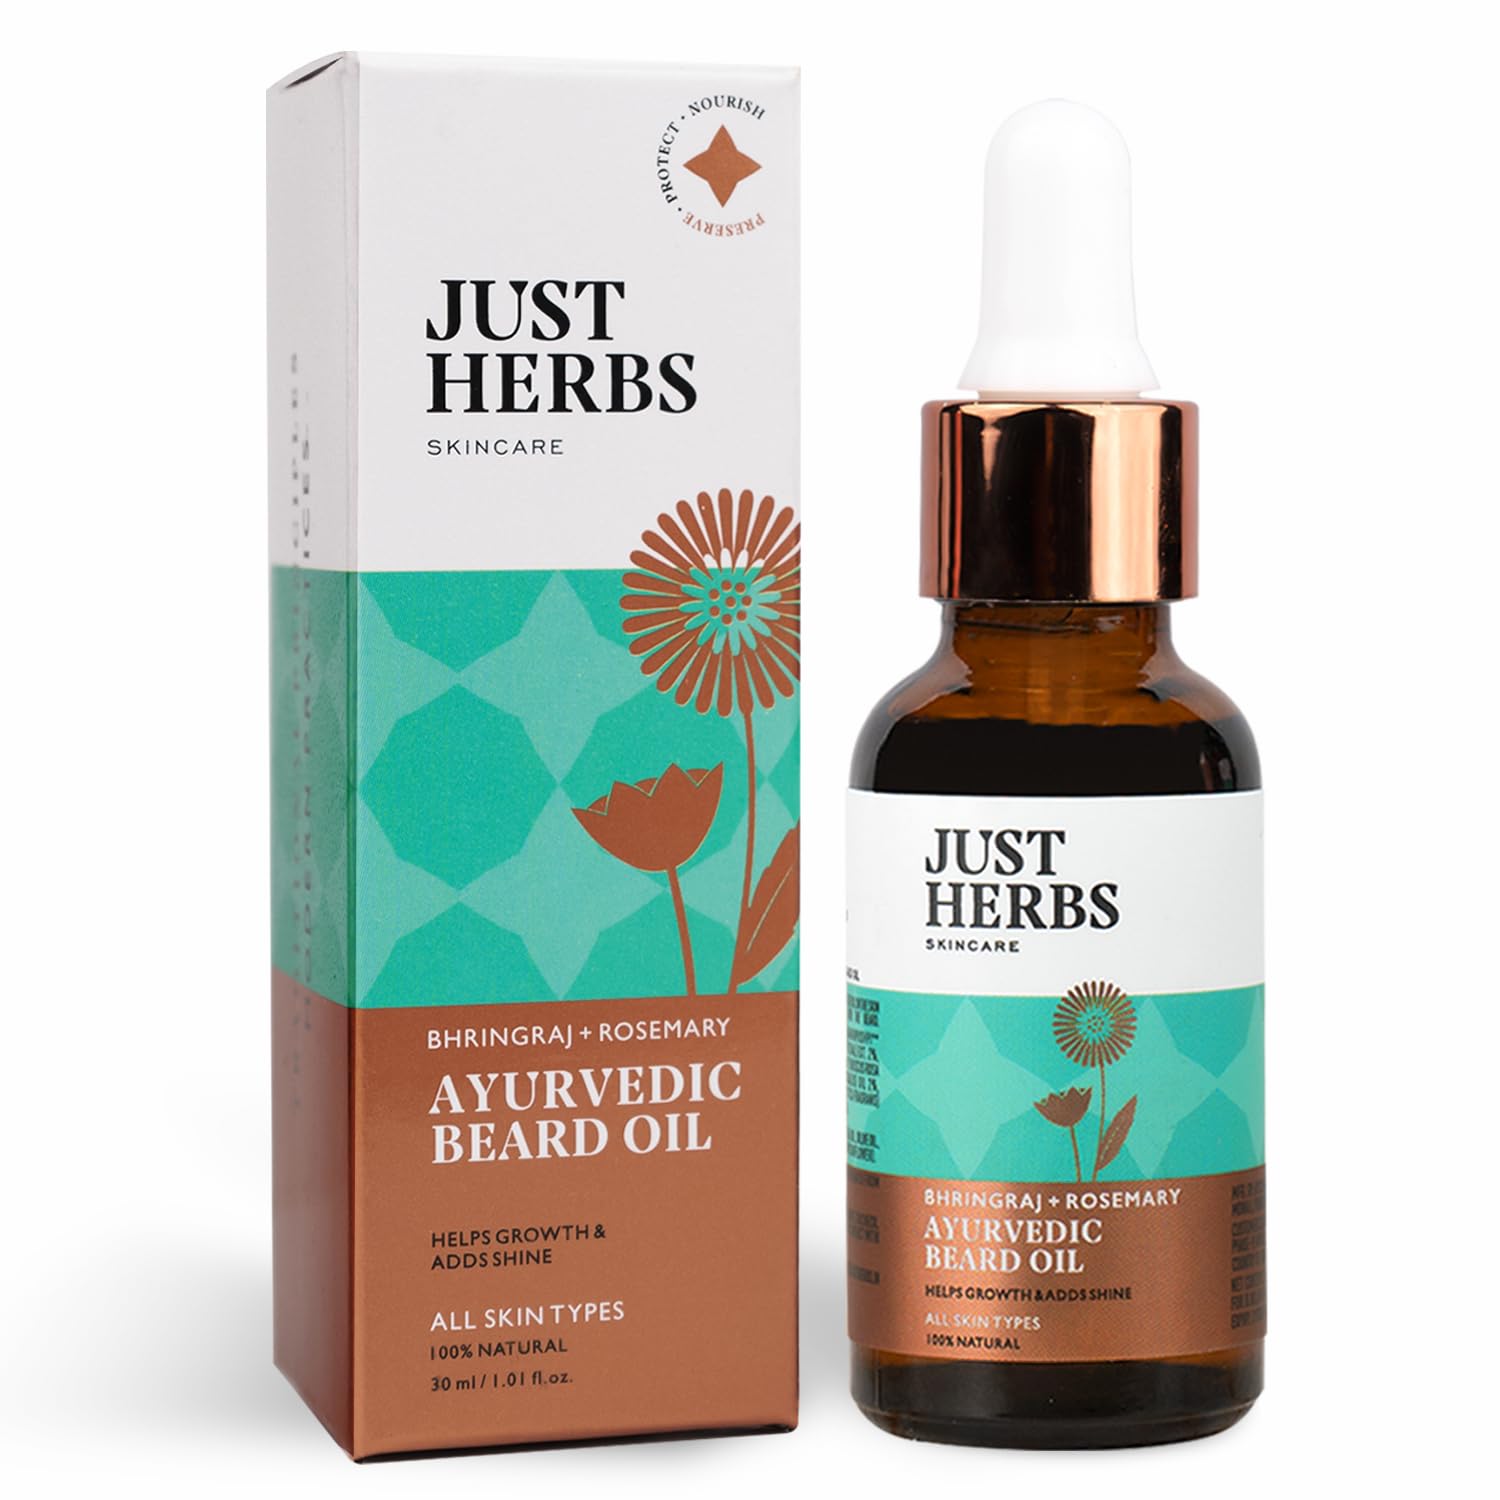 Just Herbs Ayurvedic Beard Oil